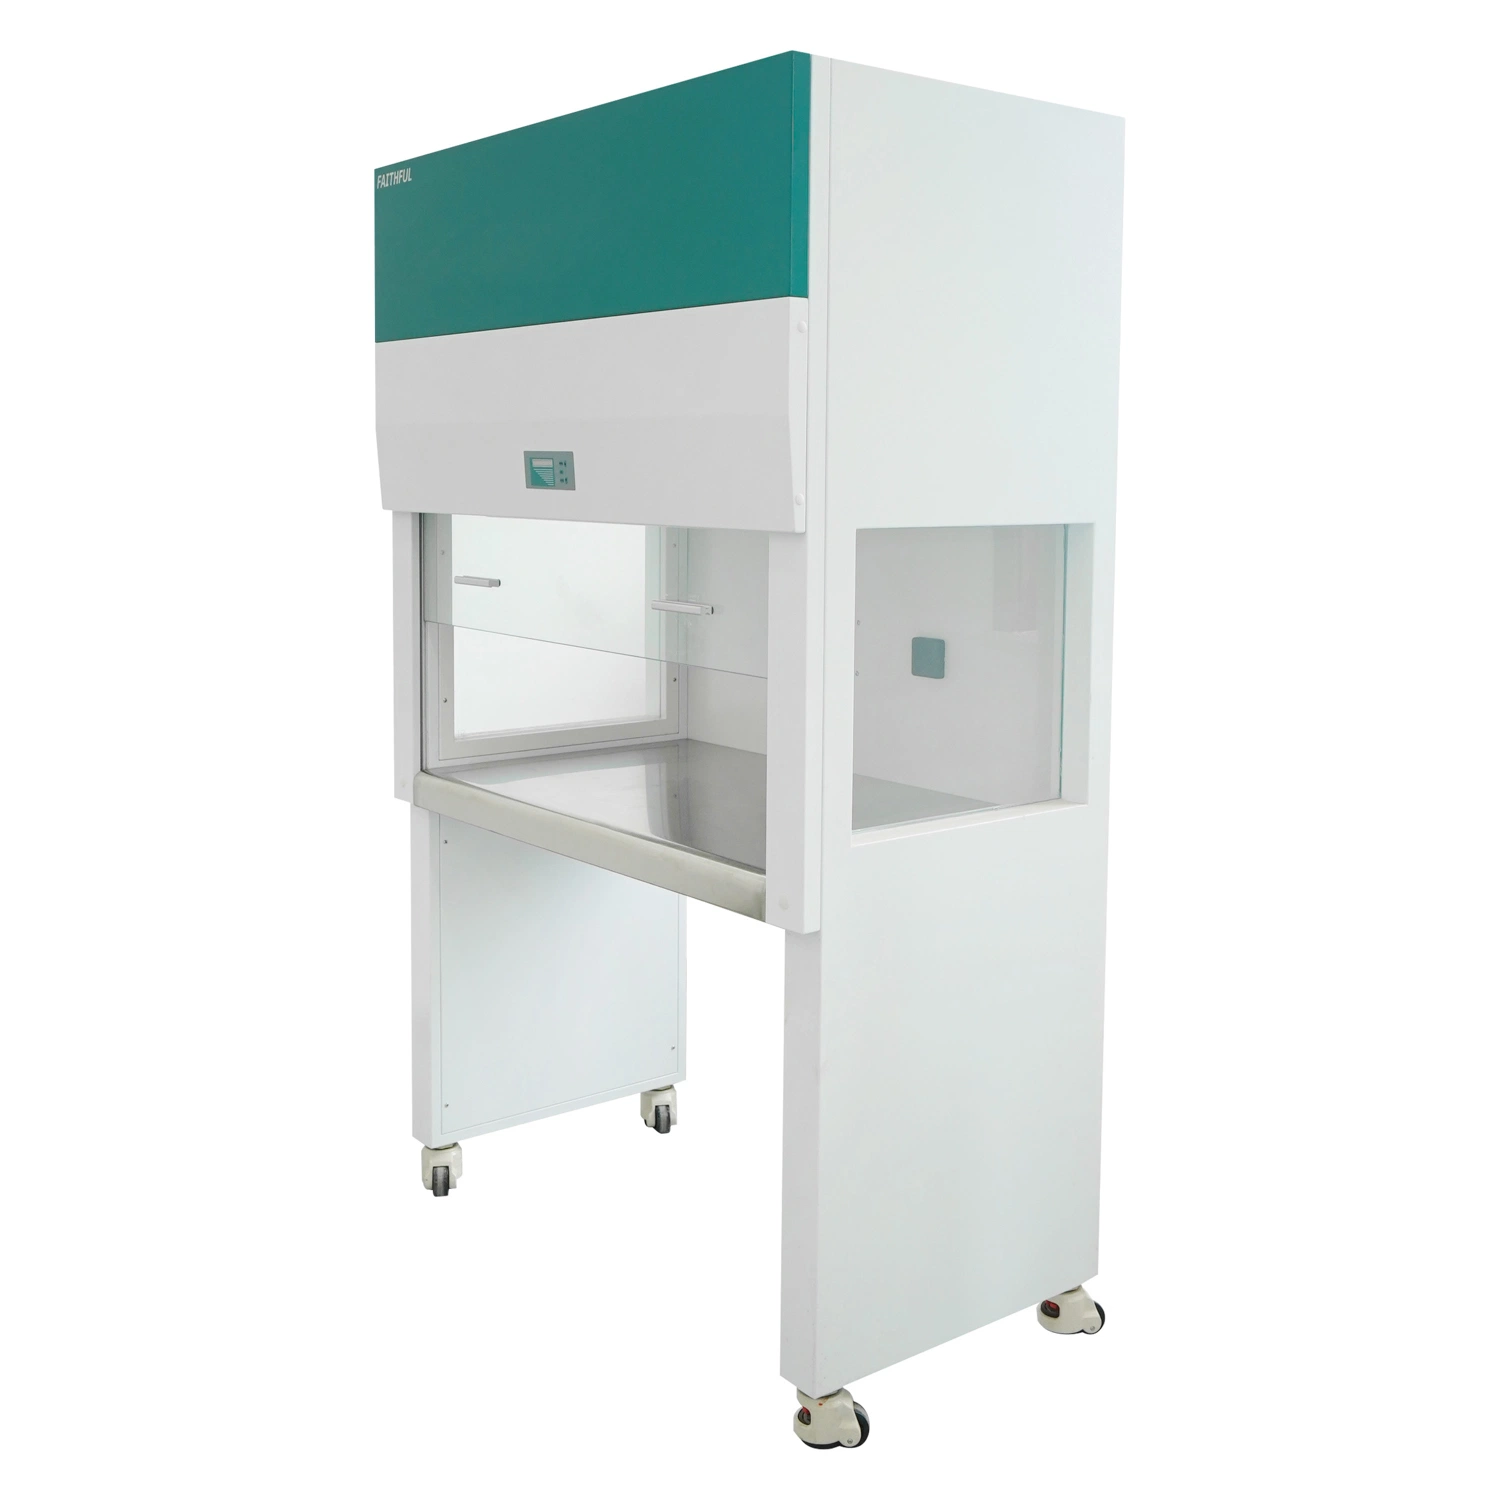 Vertical Type Laminar Flow Cabinet, Lab Bench